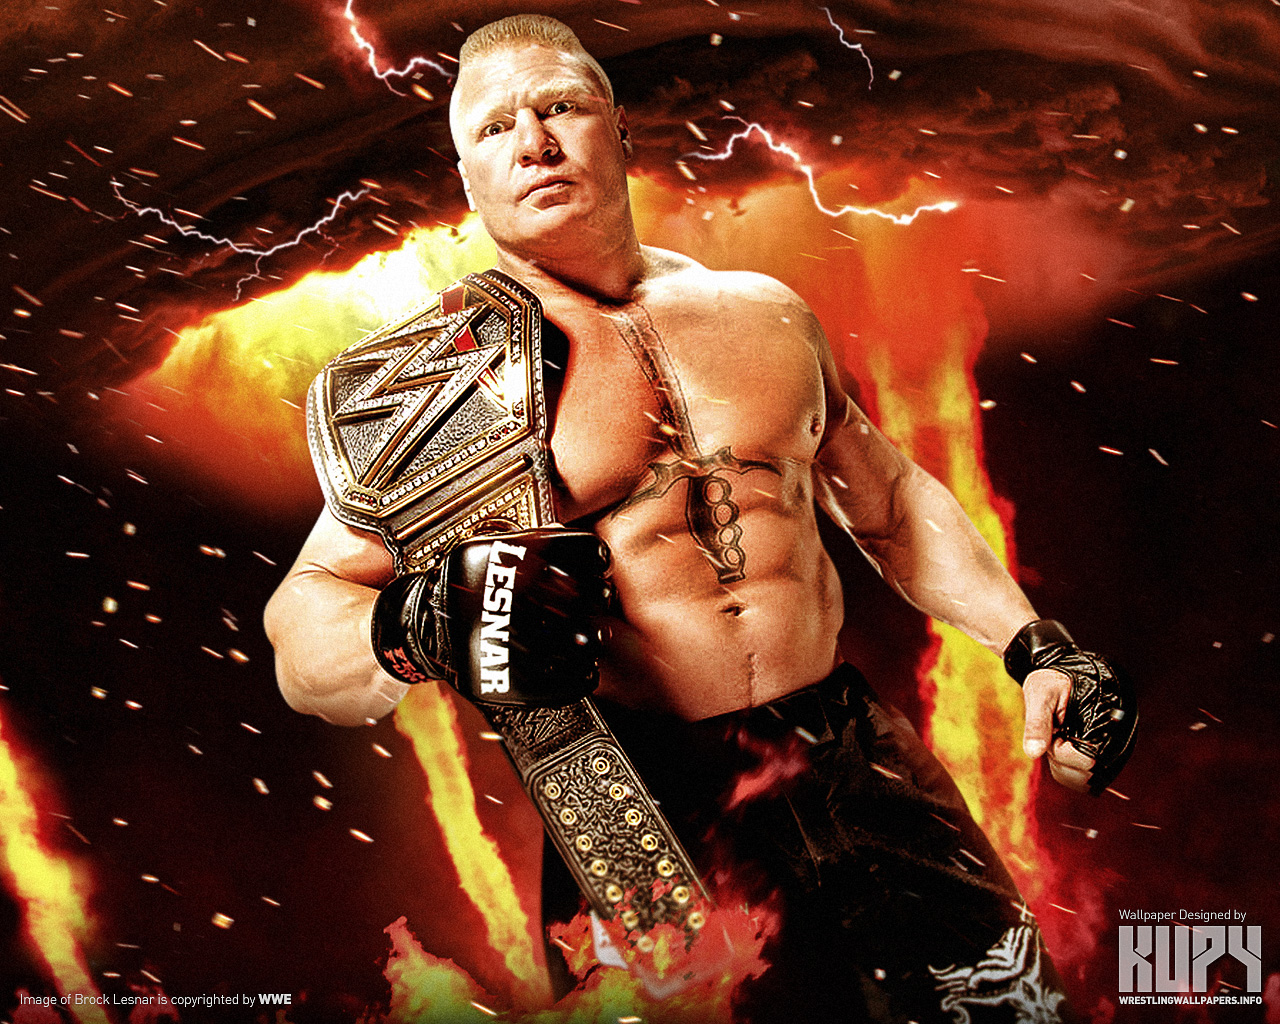 The New Wwe World Heavyweight Champion Brock Lesnar